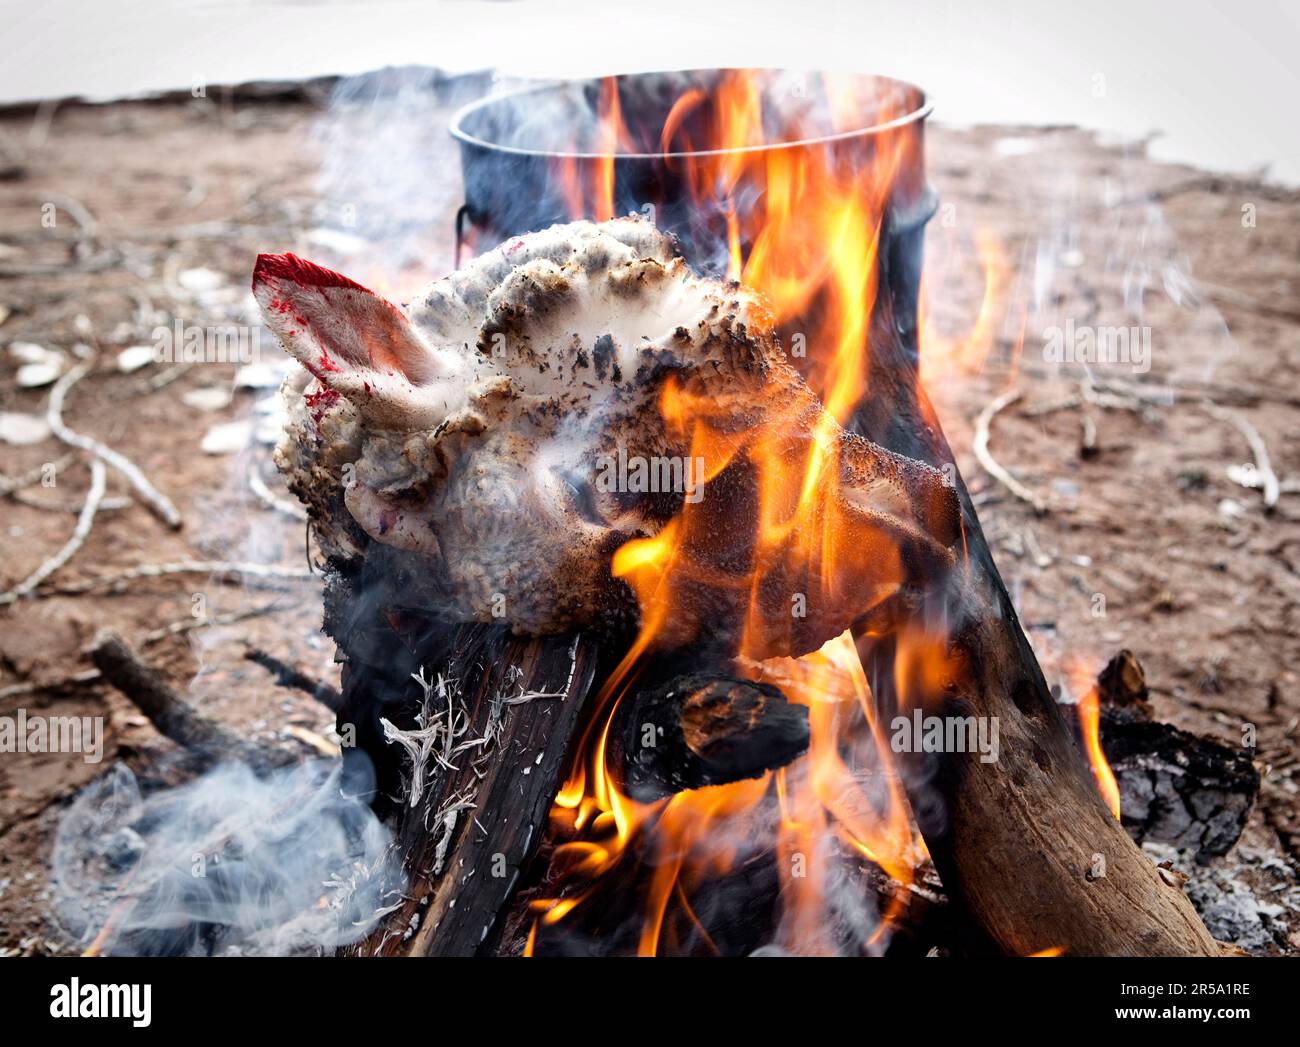 La lana è bruciata da una pecora macellata di recente Foto Stock